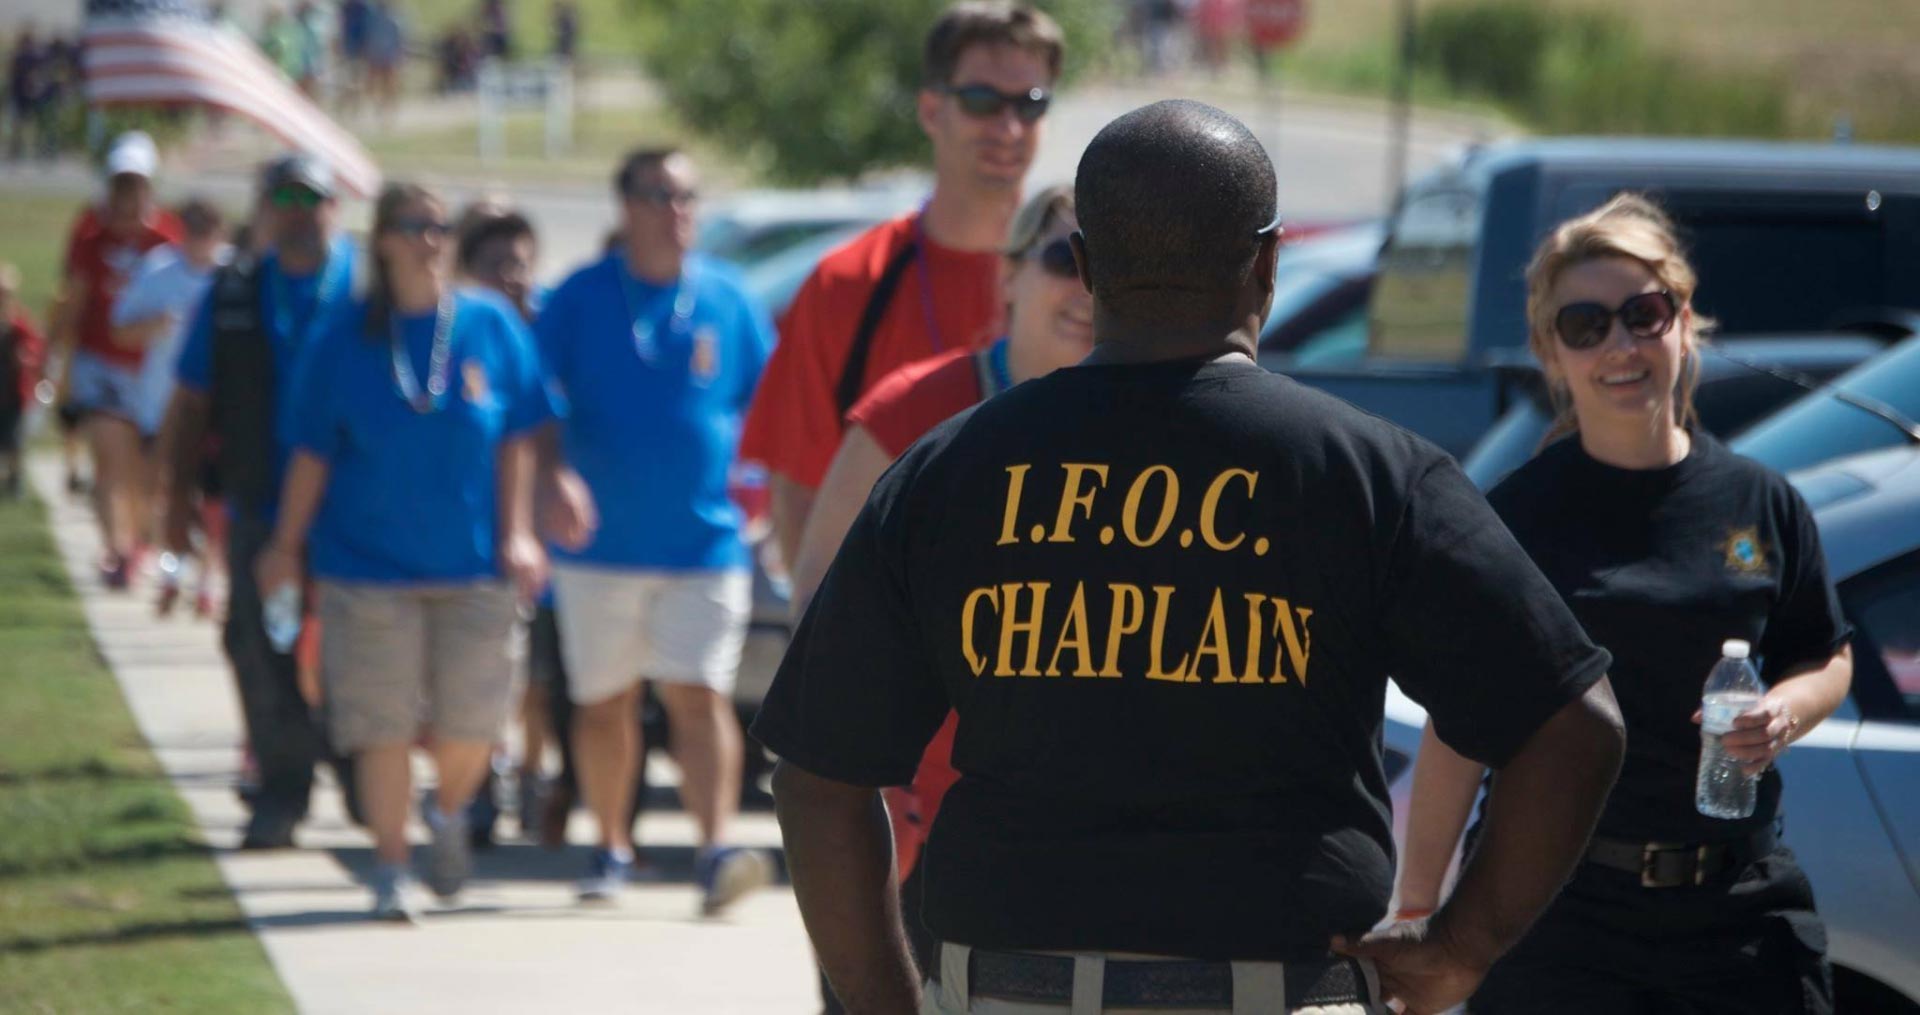 Chaplain Program at KingdomLife Church in Frisco, Texas.